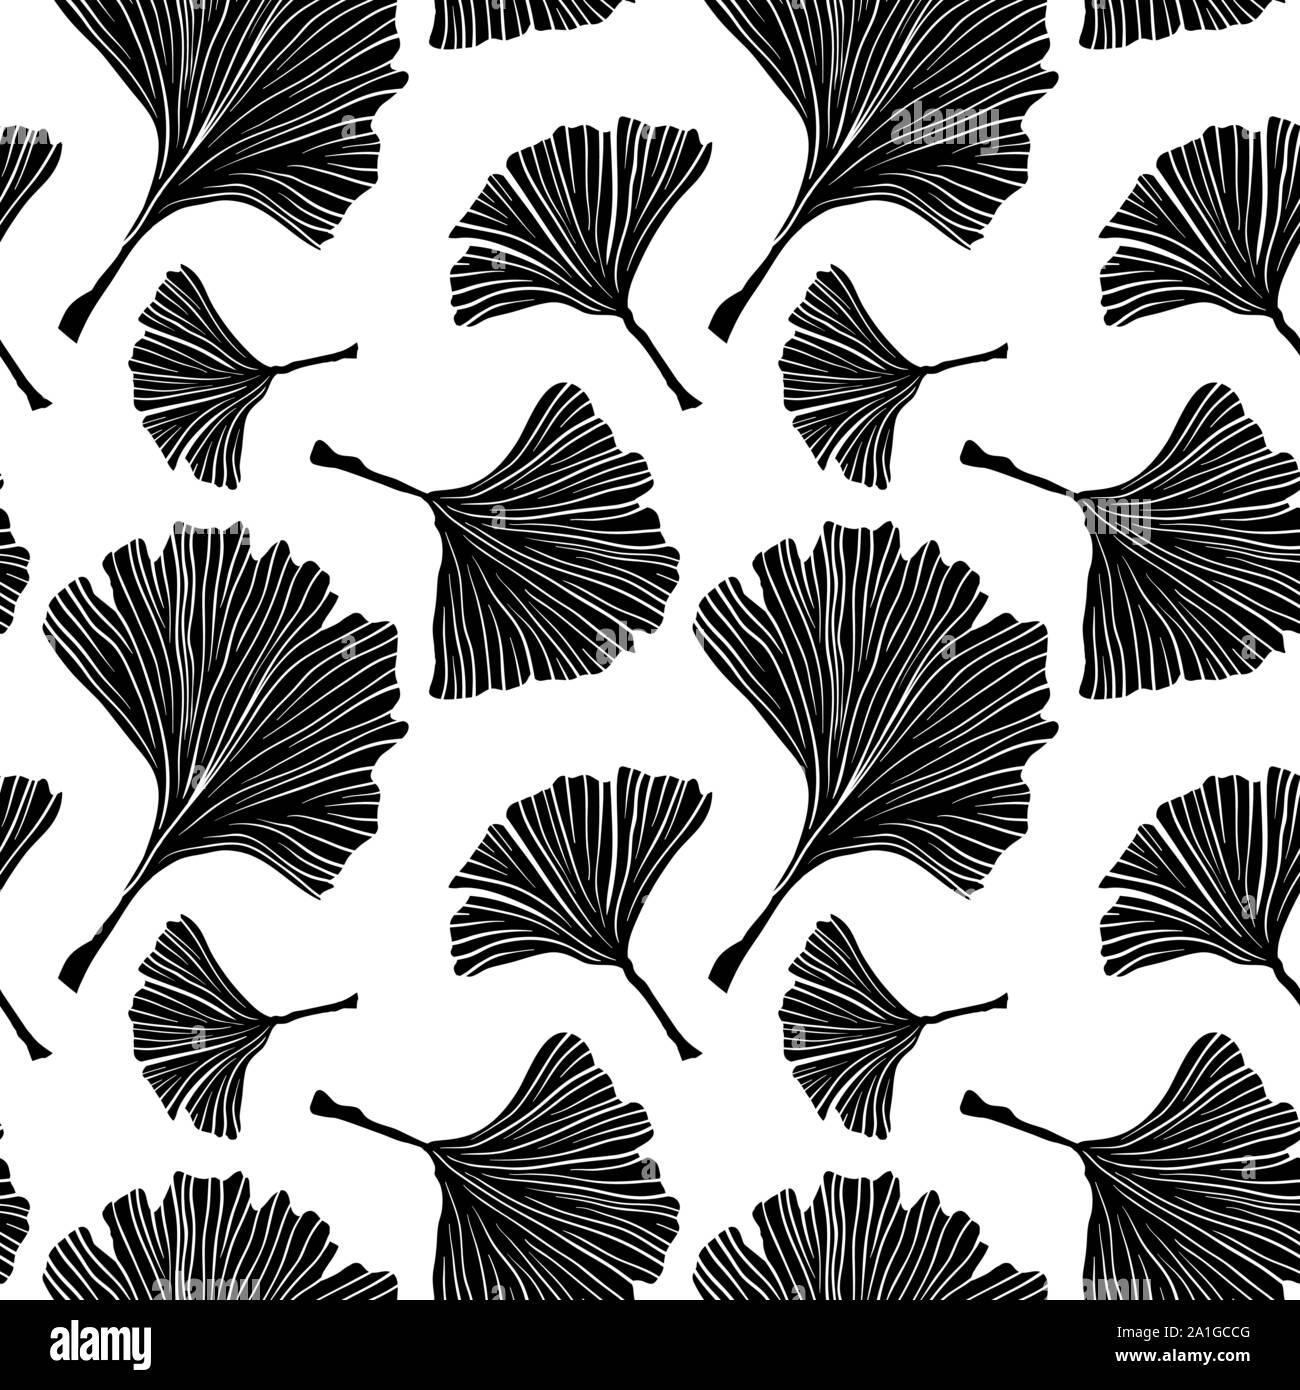 Ginkgo Biloba Plant Seamless Pattern, Large Black Leaves Silhouettes on White. Vector Monochrome Illustration. Ayurvedic Medicine Theme. Japanese Tree. Stock Vector